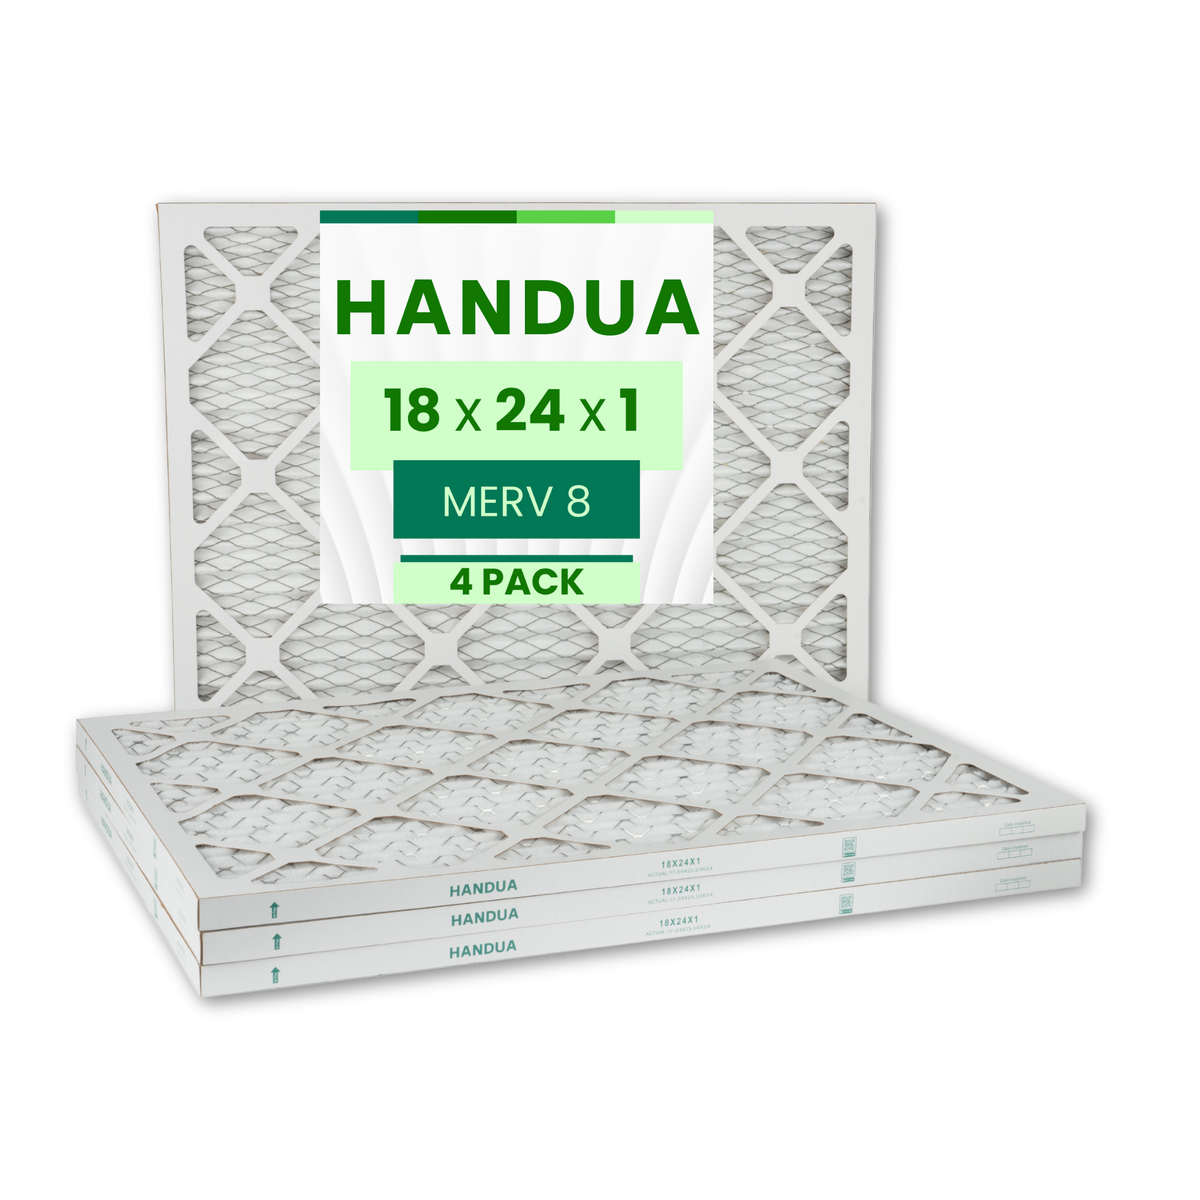 Handua 18x24x1 Air Filter MERV 8 Dust Control, Plated Furnace AC Air Replacement Filter, 4 Pack (Actual Size: 17.75" x 23.75" x 0.75")